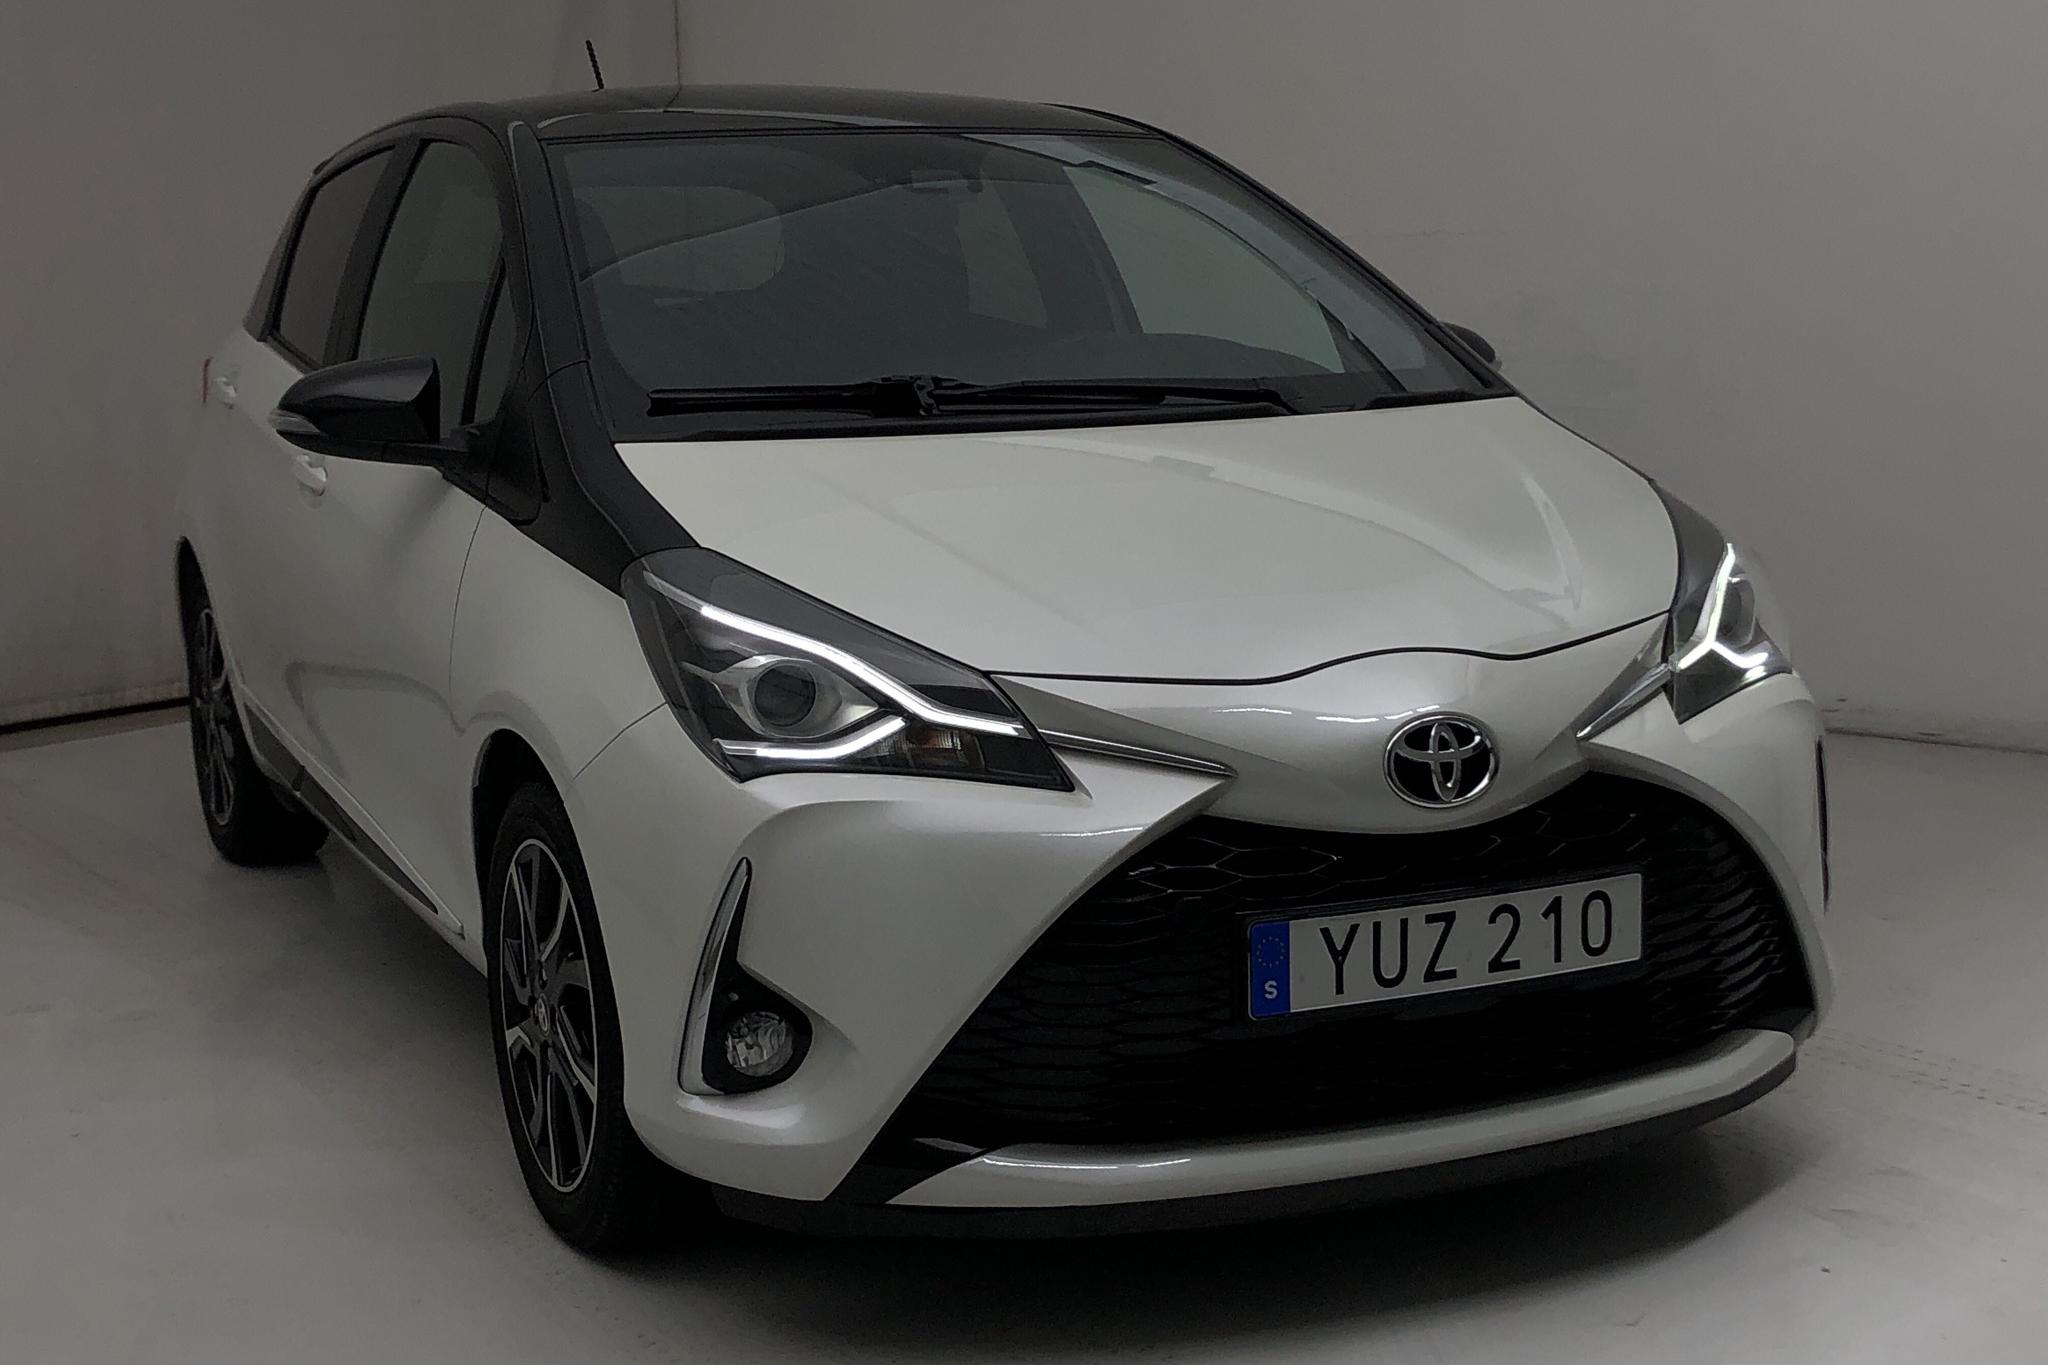 Toyota Yaris 1.5 5dr (111hk) - 8 000 km - Automatic - white - 2018